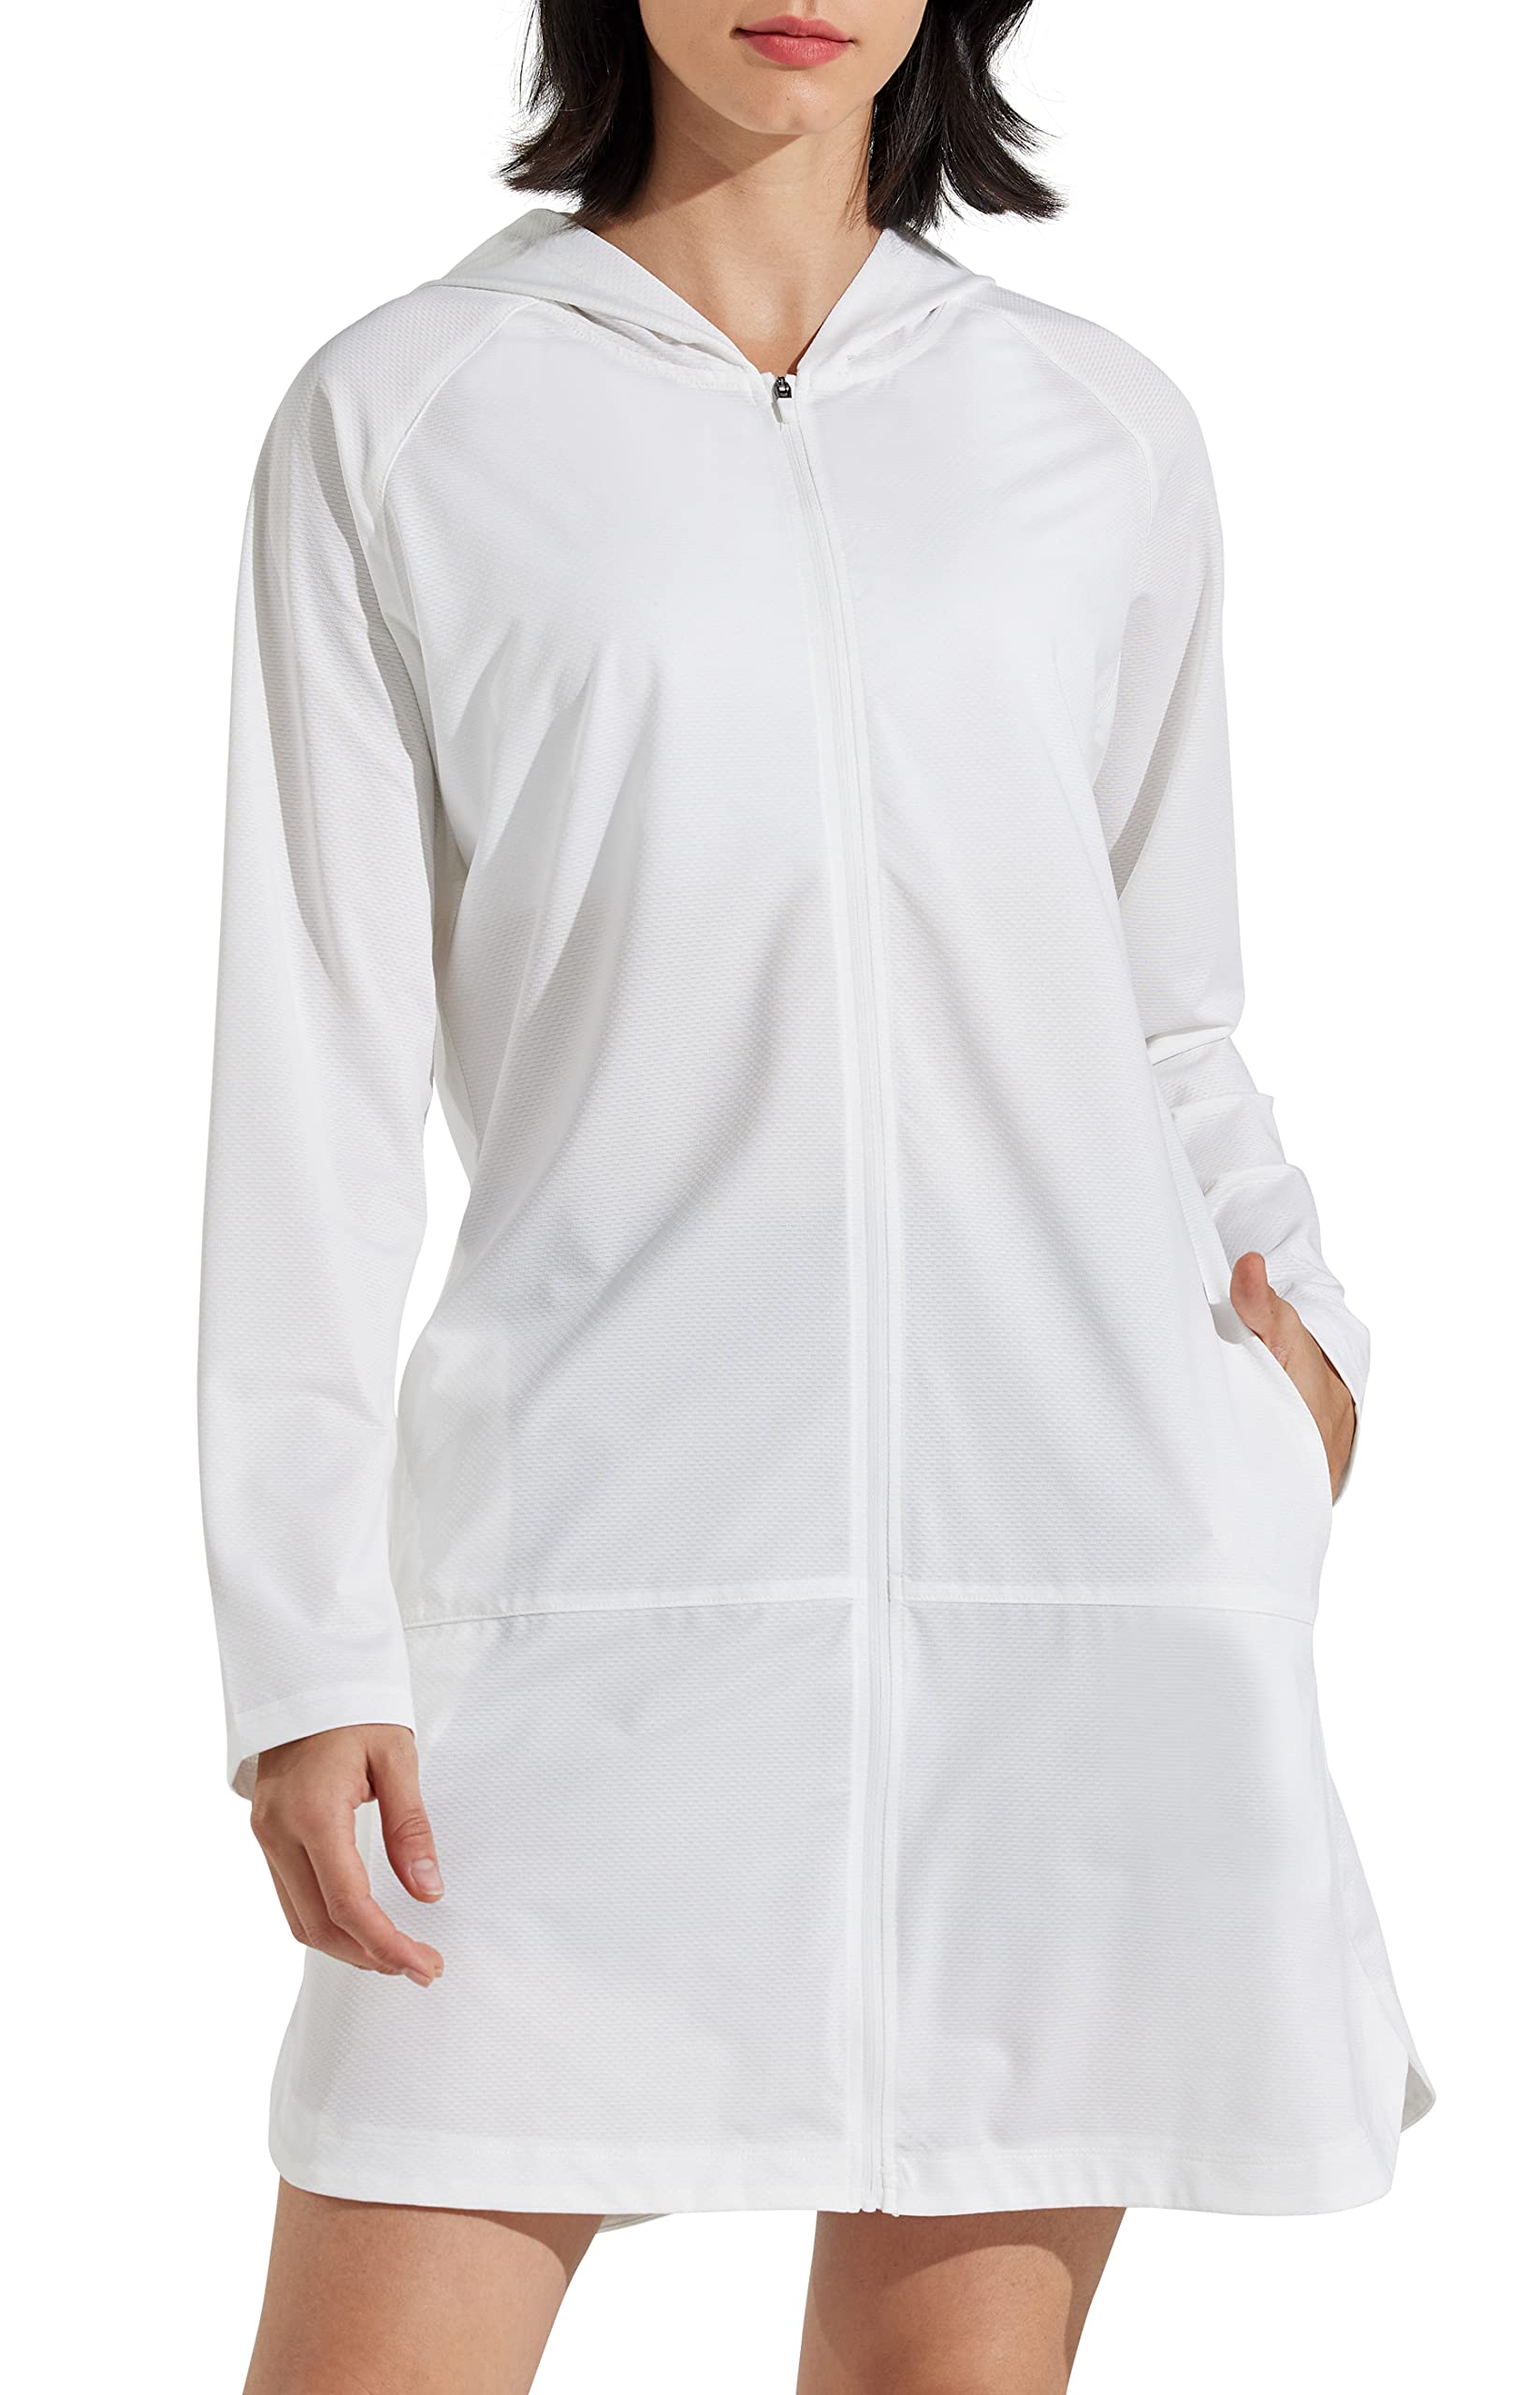 Libin Womens Sun Protection Hoodie Jacket Long Sleeve Swim Beach Cover Up Lightweight Zip Hiking Shirt With Pockets Upf 50, Whit